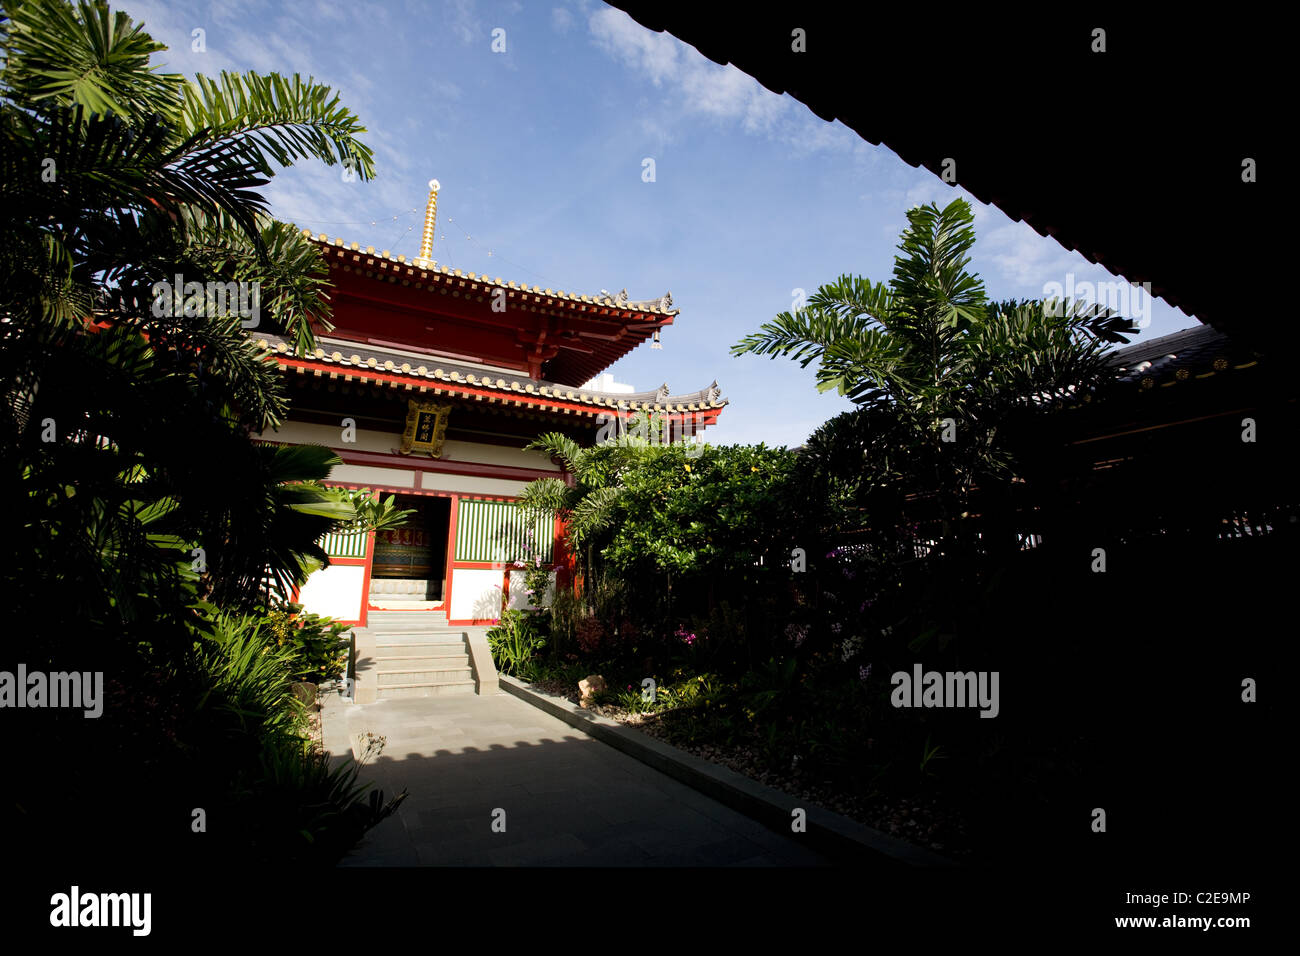 Un tempio buddista con un giardino e ombra Foto Stock